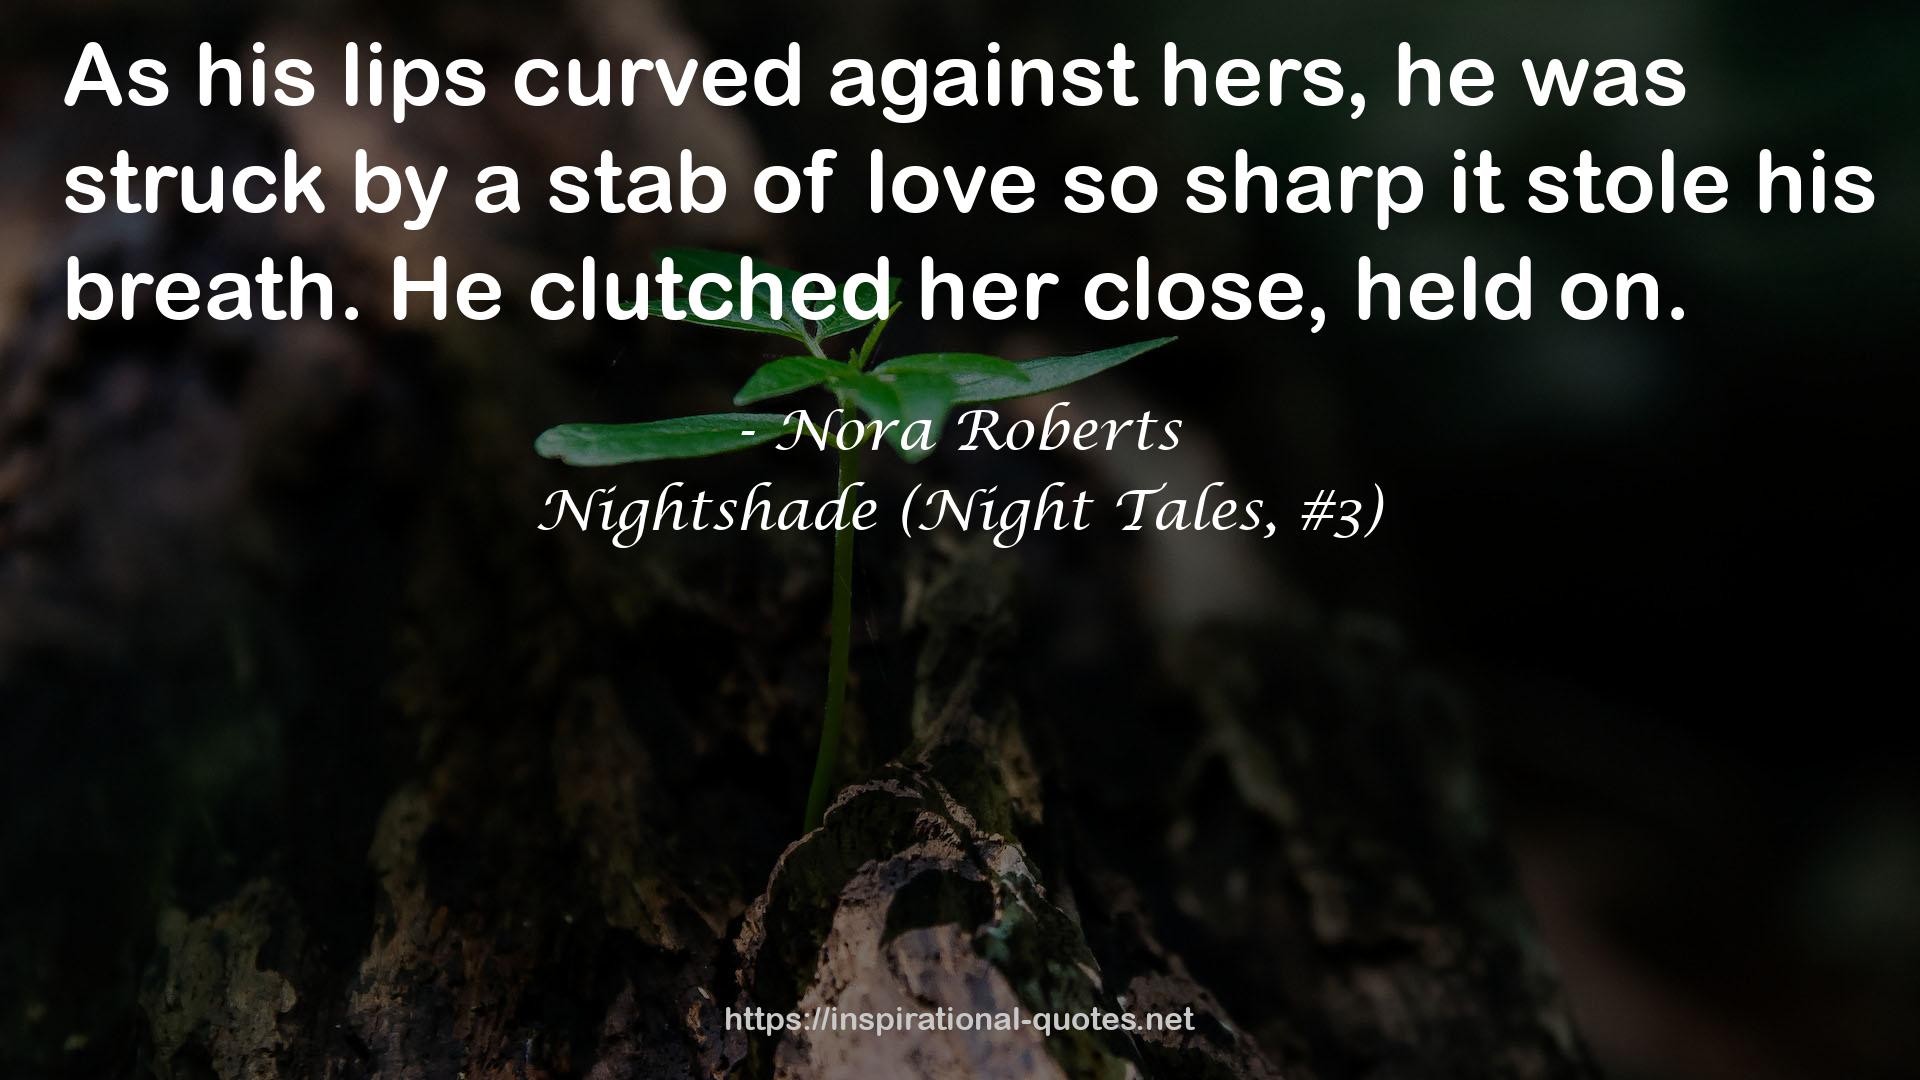 Nightshade (Night Tales, #3) QUOTES